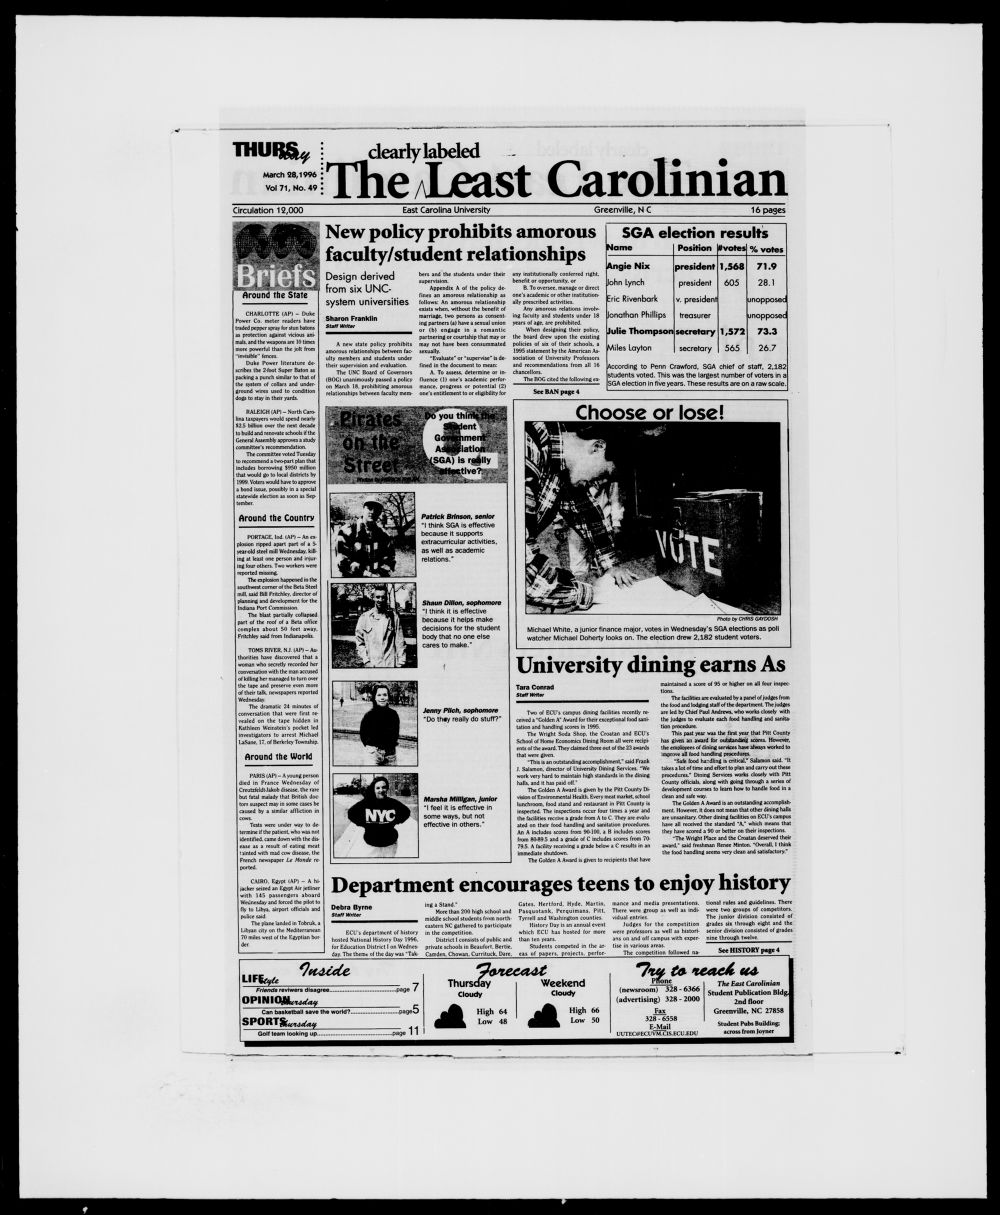 The East Carolinian, March 28, 1996 photo